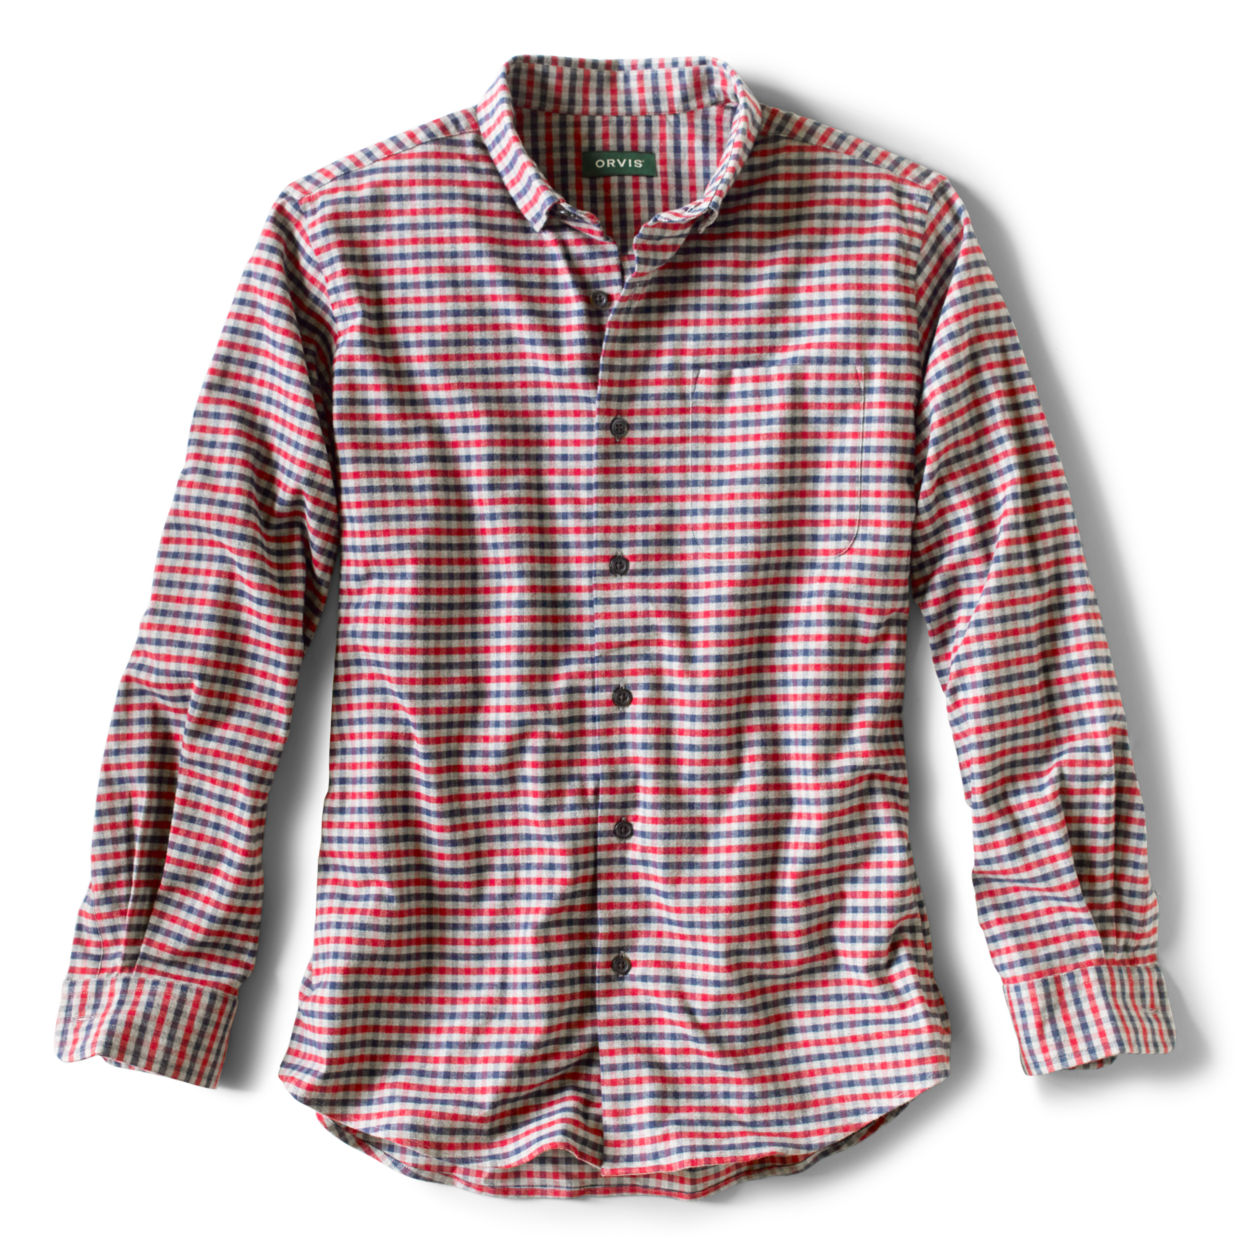 Cotton/Merino Performance Long-Sleeved Shirt - Regular